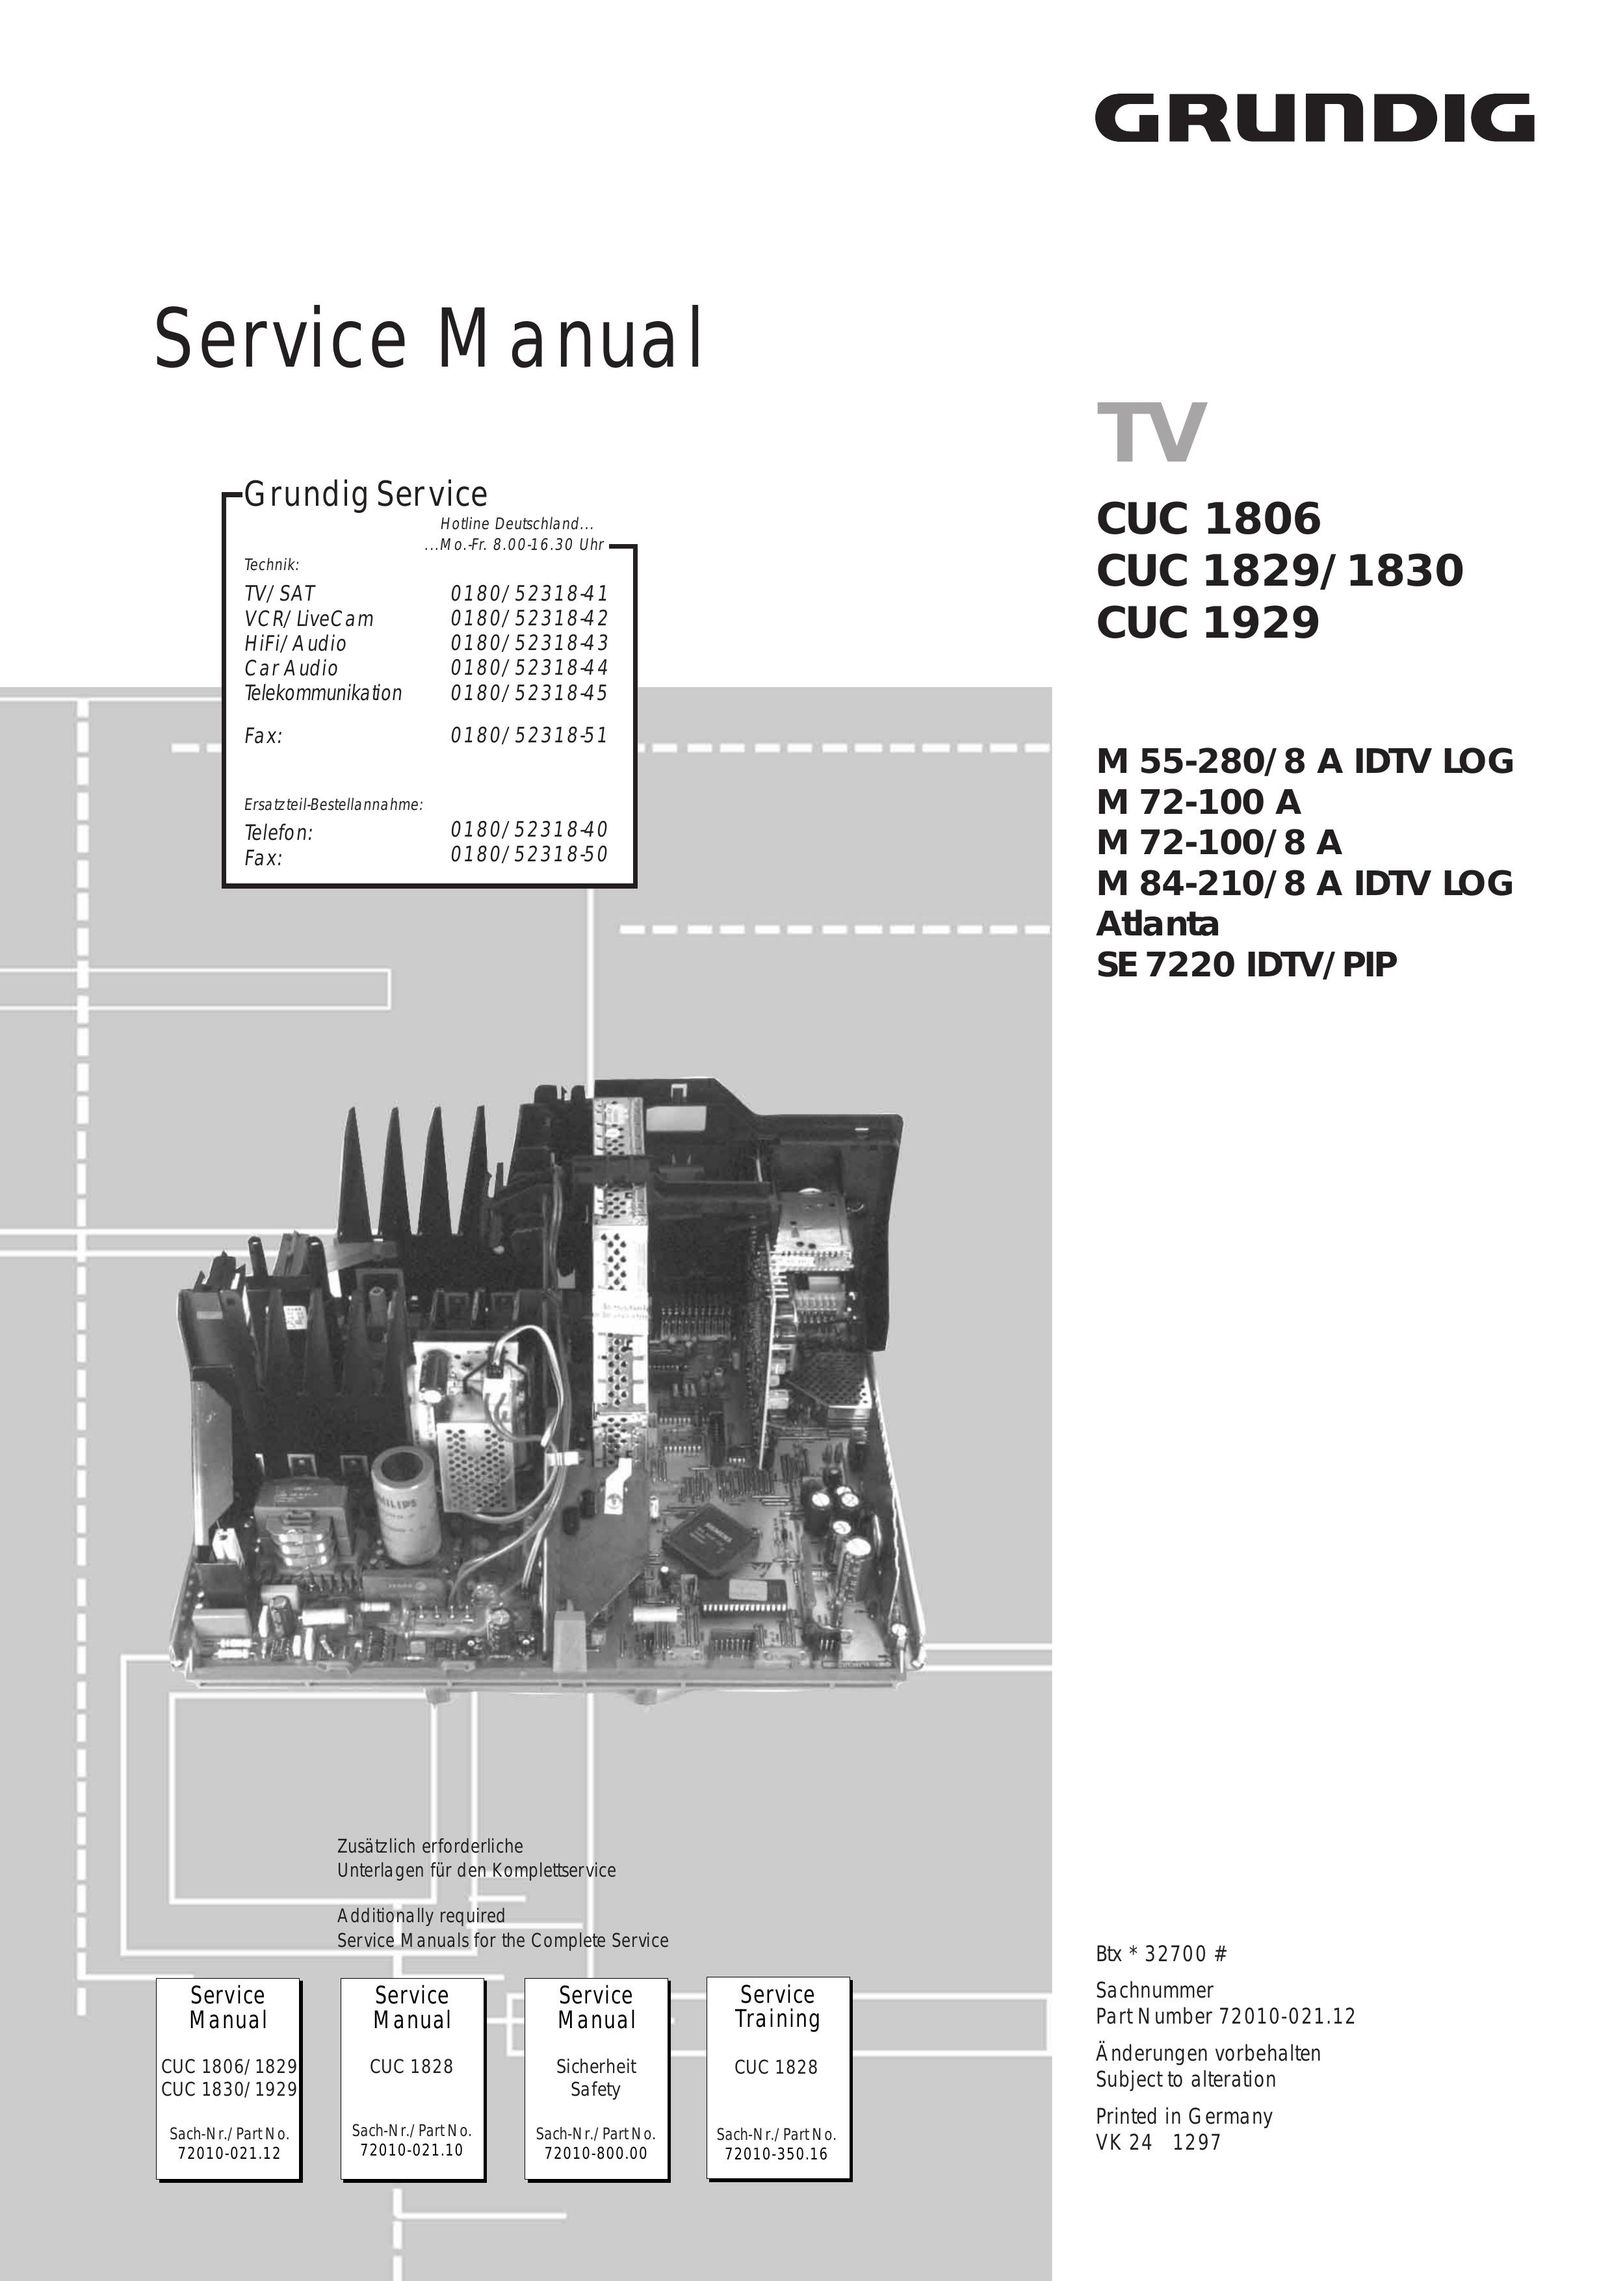 Grundig M 84-210/8 A IDTV LOG Computer Hardware User Manual